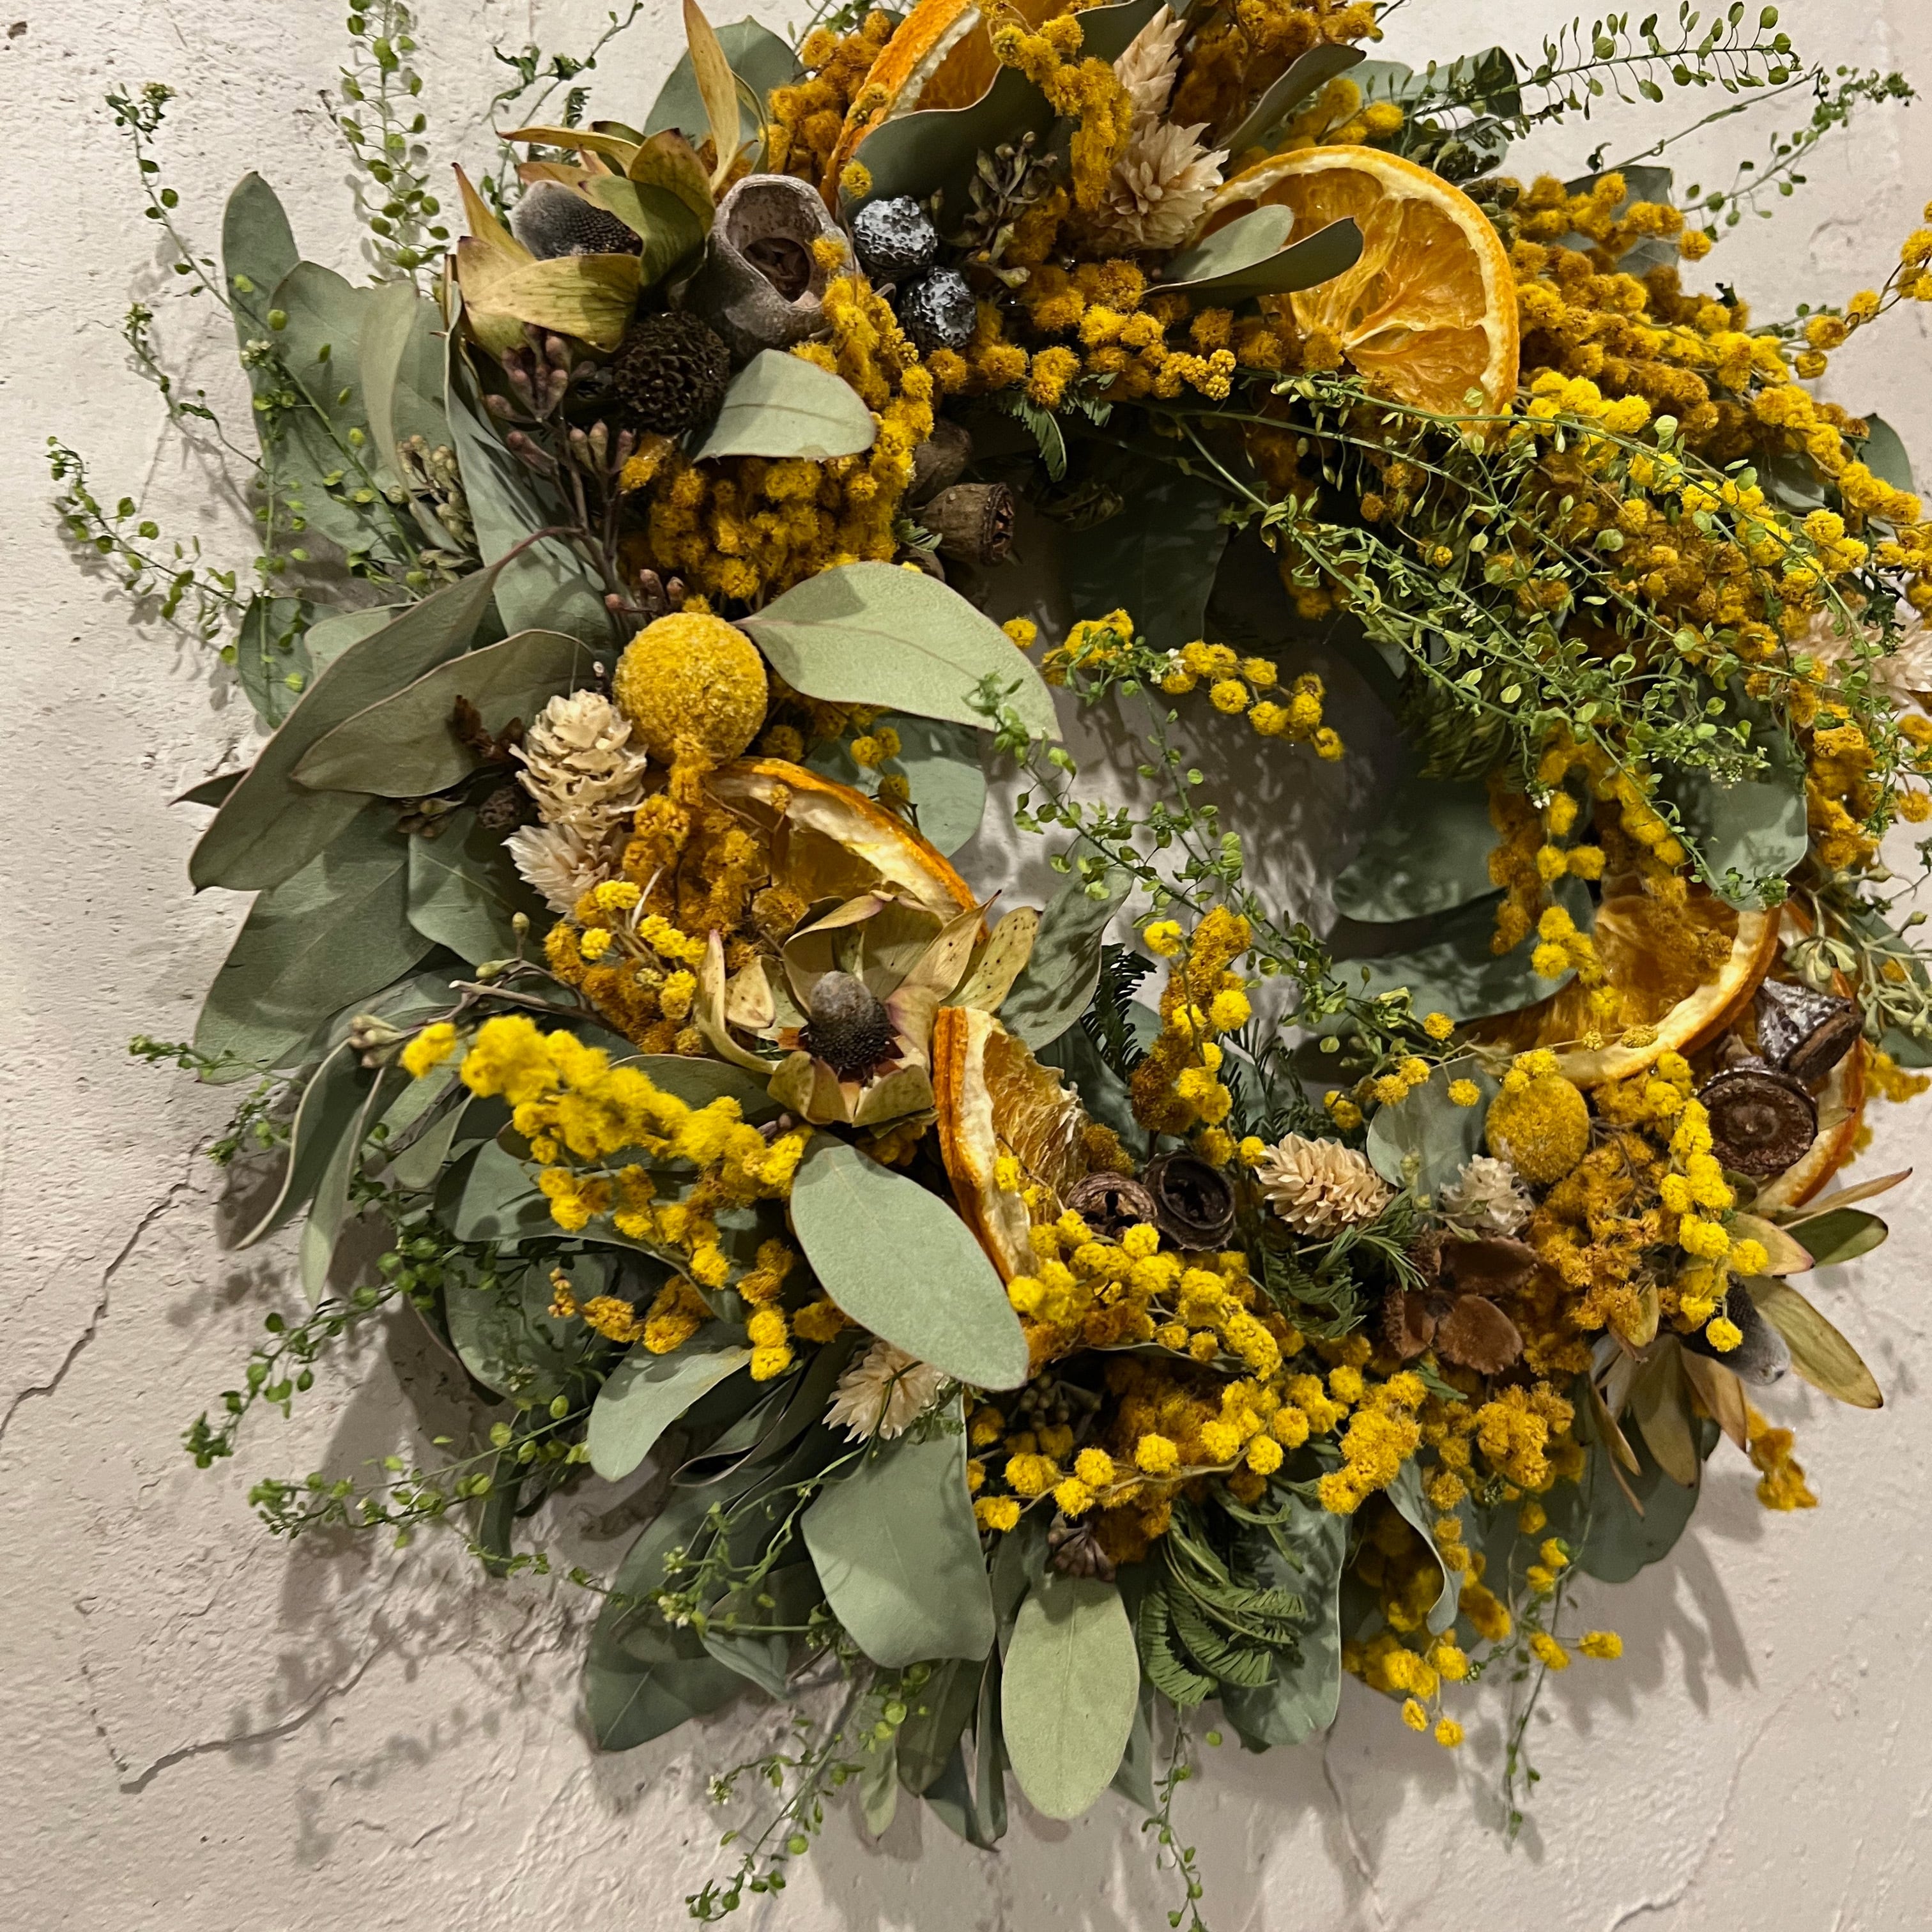 Dried flower mimosa wreath ドライフラワーリース ミモザ×ユーカリ×オレンジスライスの黄色いリース  壁飾りドアリース/2022002 | number12 powered by BASE